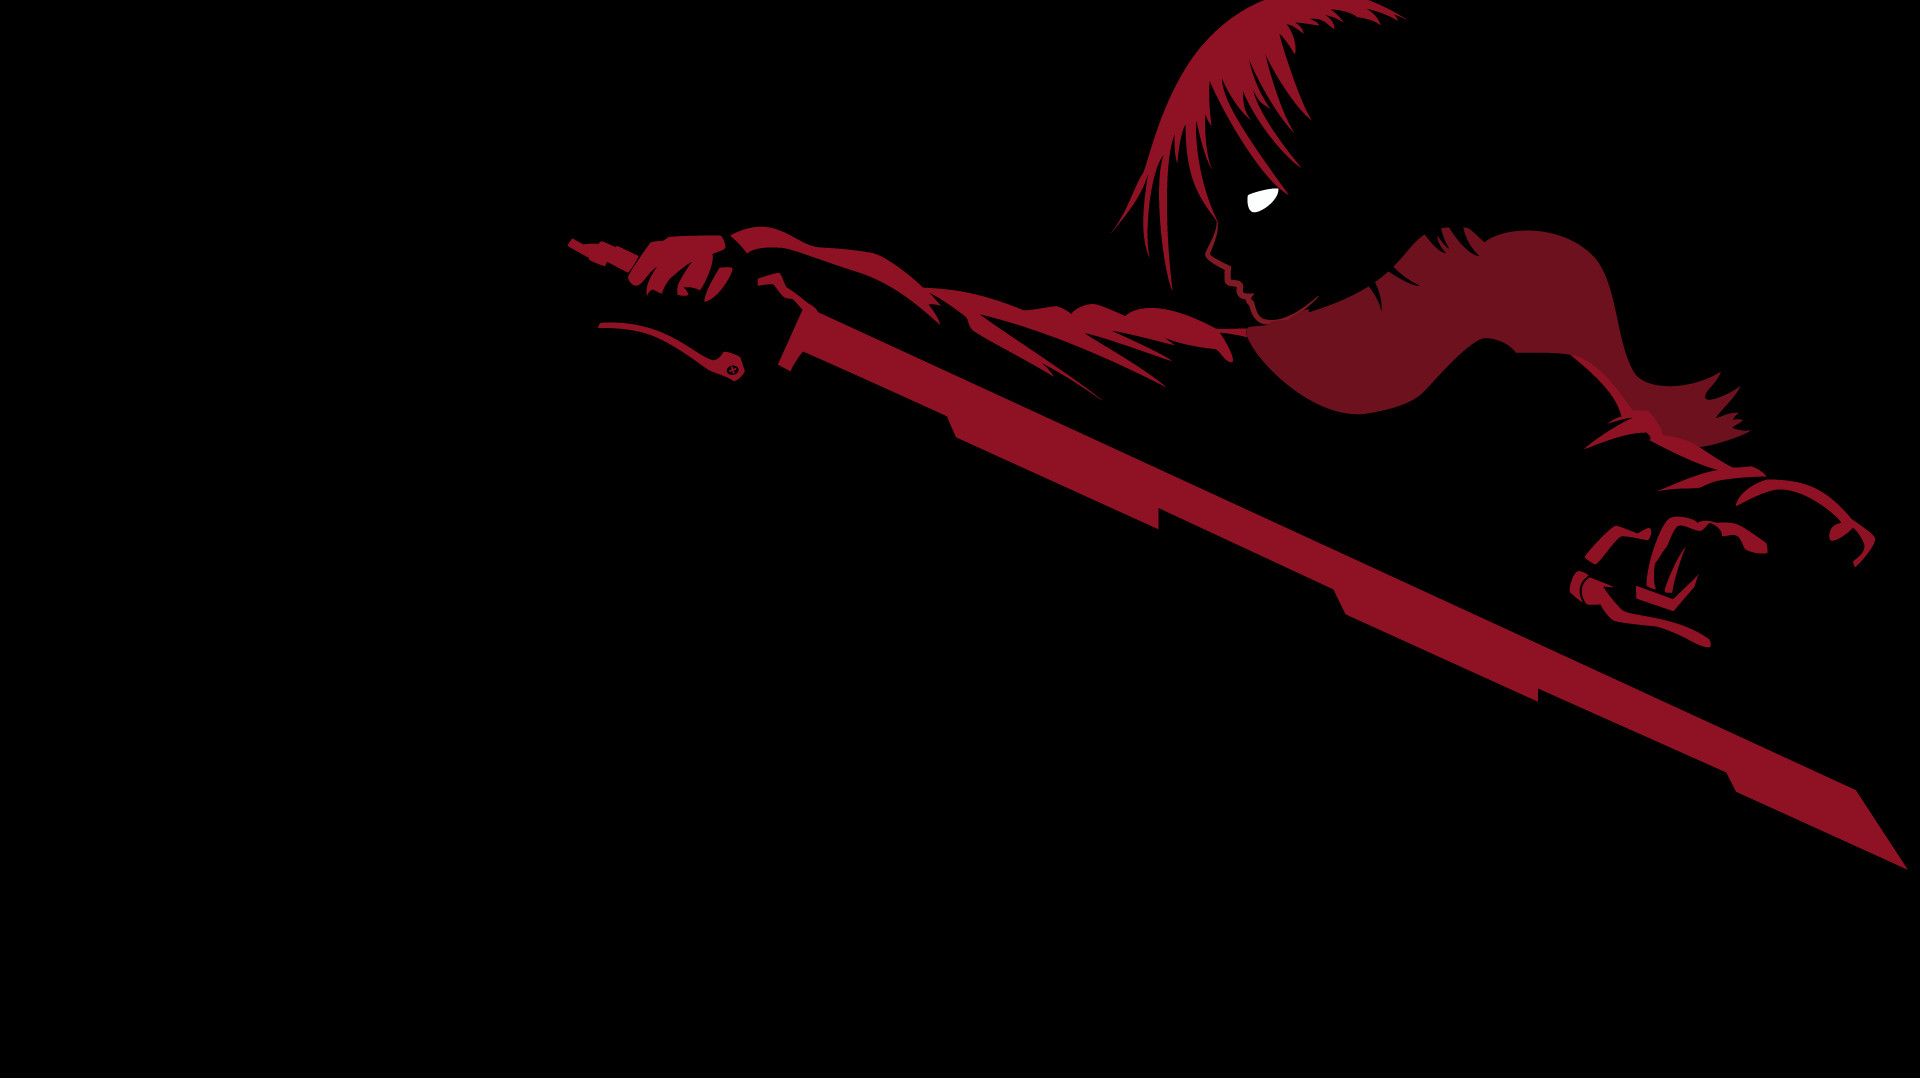 Dark Red Anime Wallpapers On Wallpaperdog